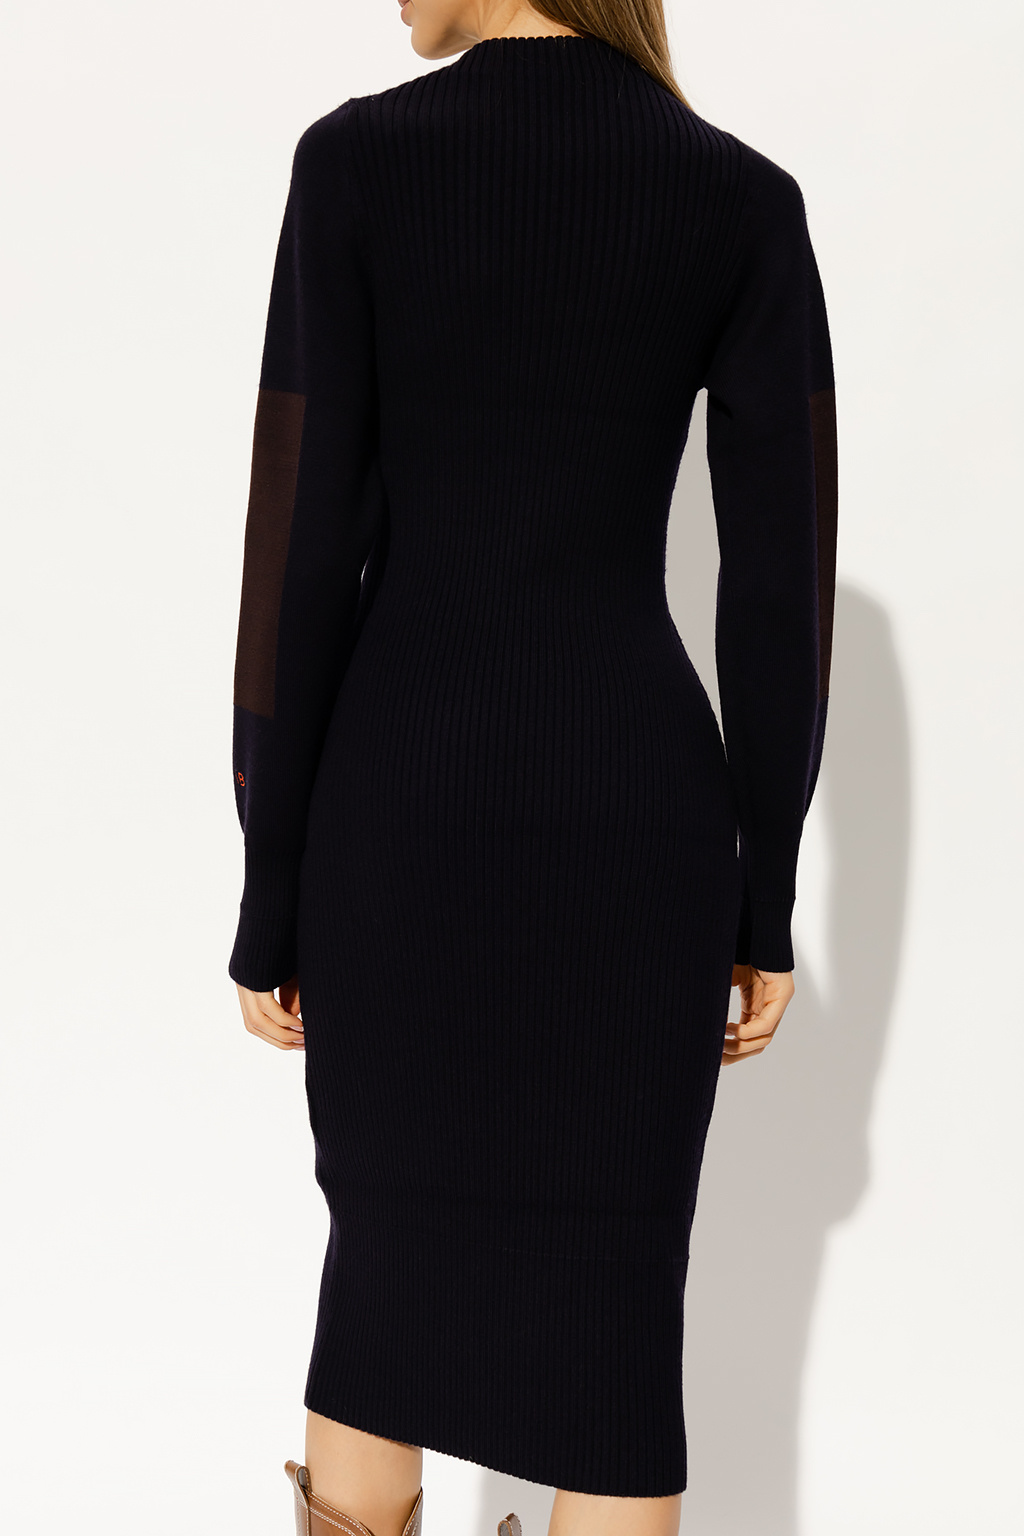 Victoria Beckham Icon Clash Short-Sleeve Dress